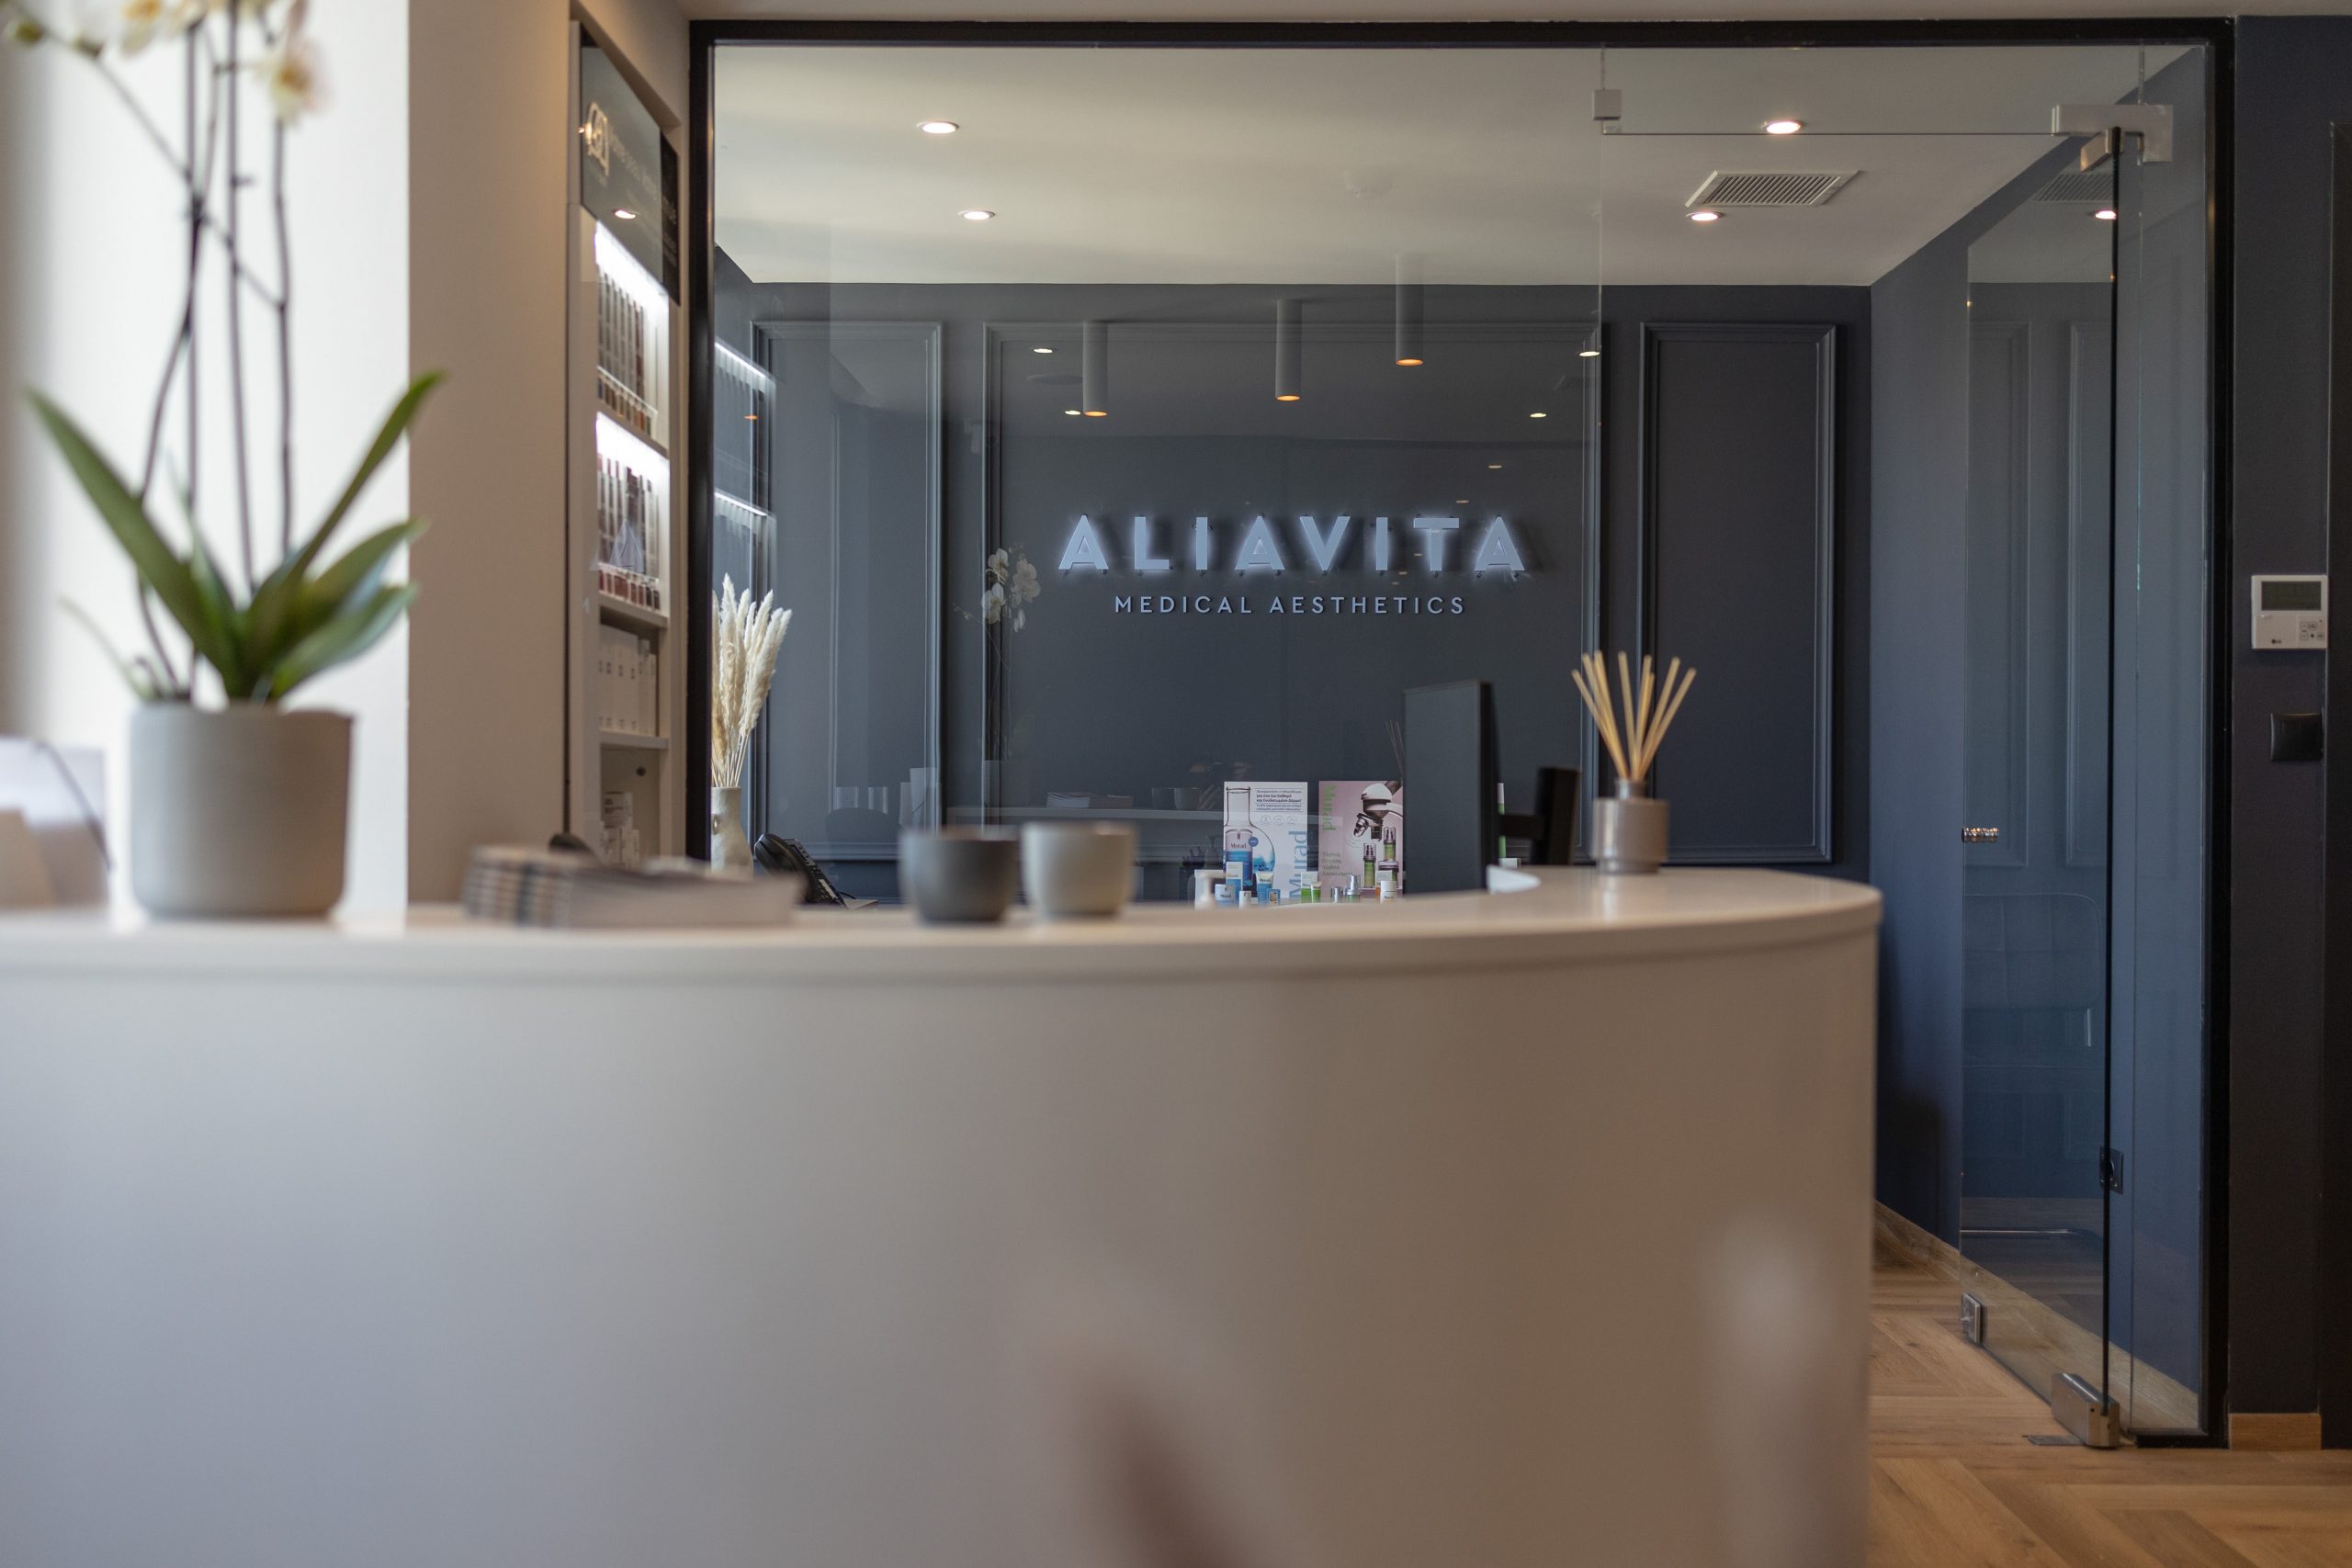 Aliavita Medical Aesthetics: Ολοκληρωμένες υπηρεσίες Ιατρικής Αισθητικής